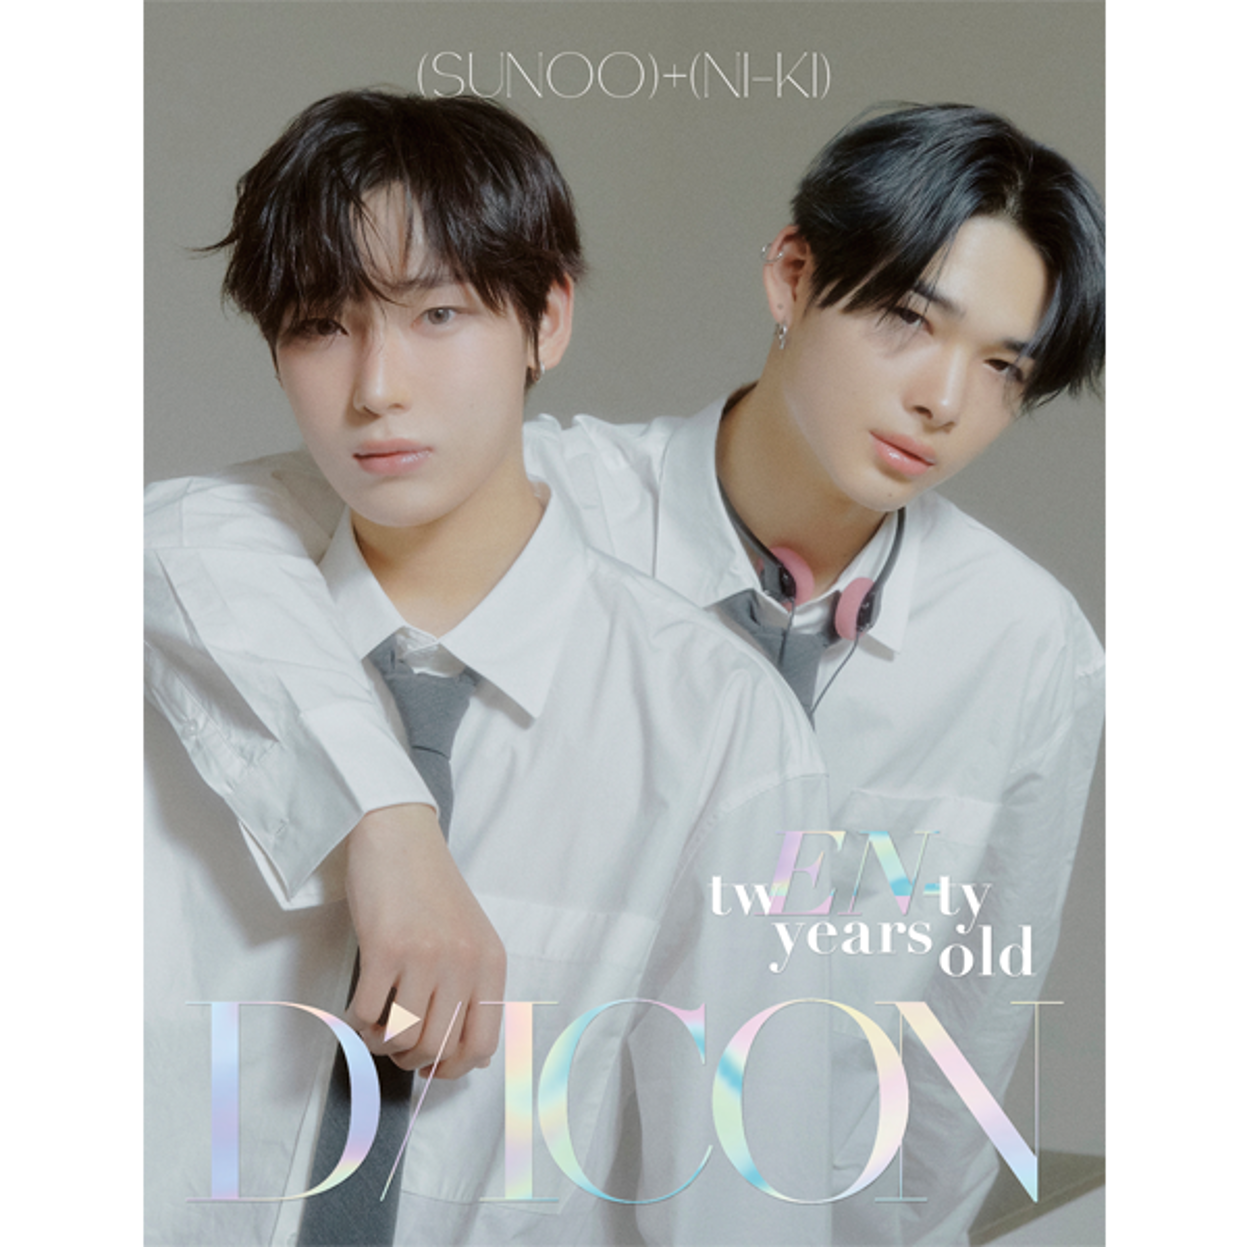 DICON VOLUME N°19 ENHYPEN : tw(EN-)ty years old _ SUNOO+NI-KI